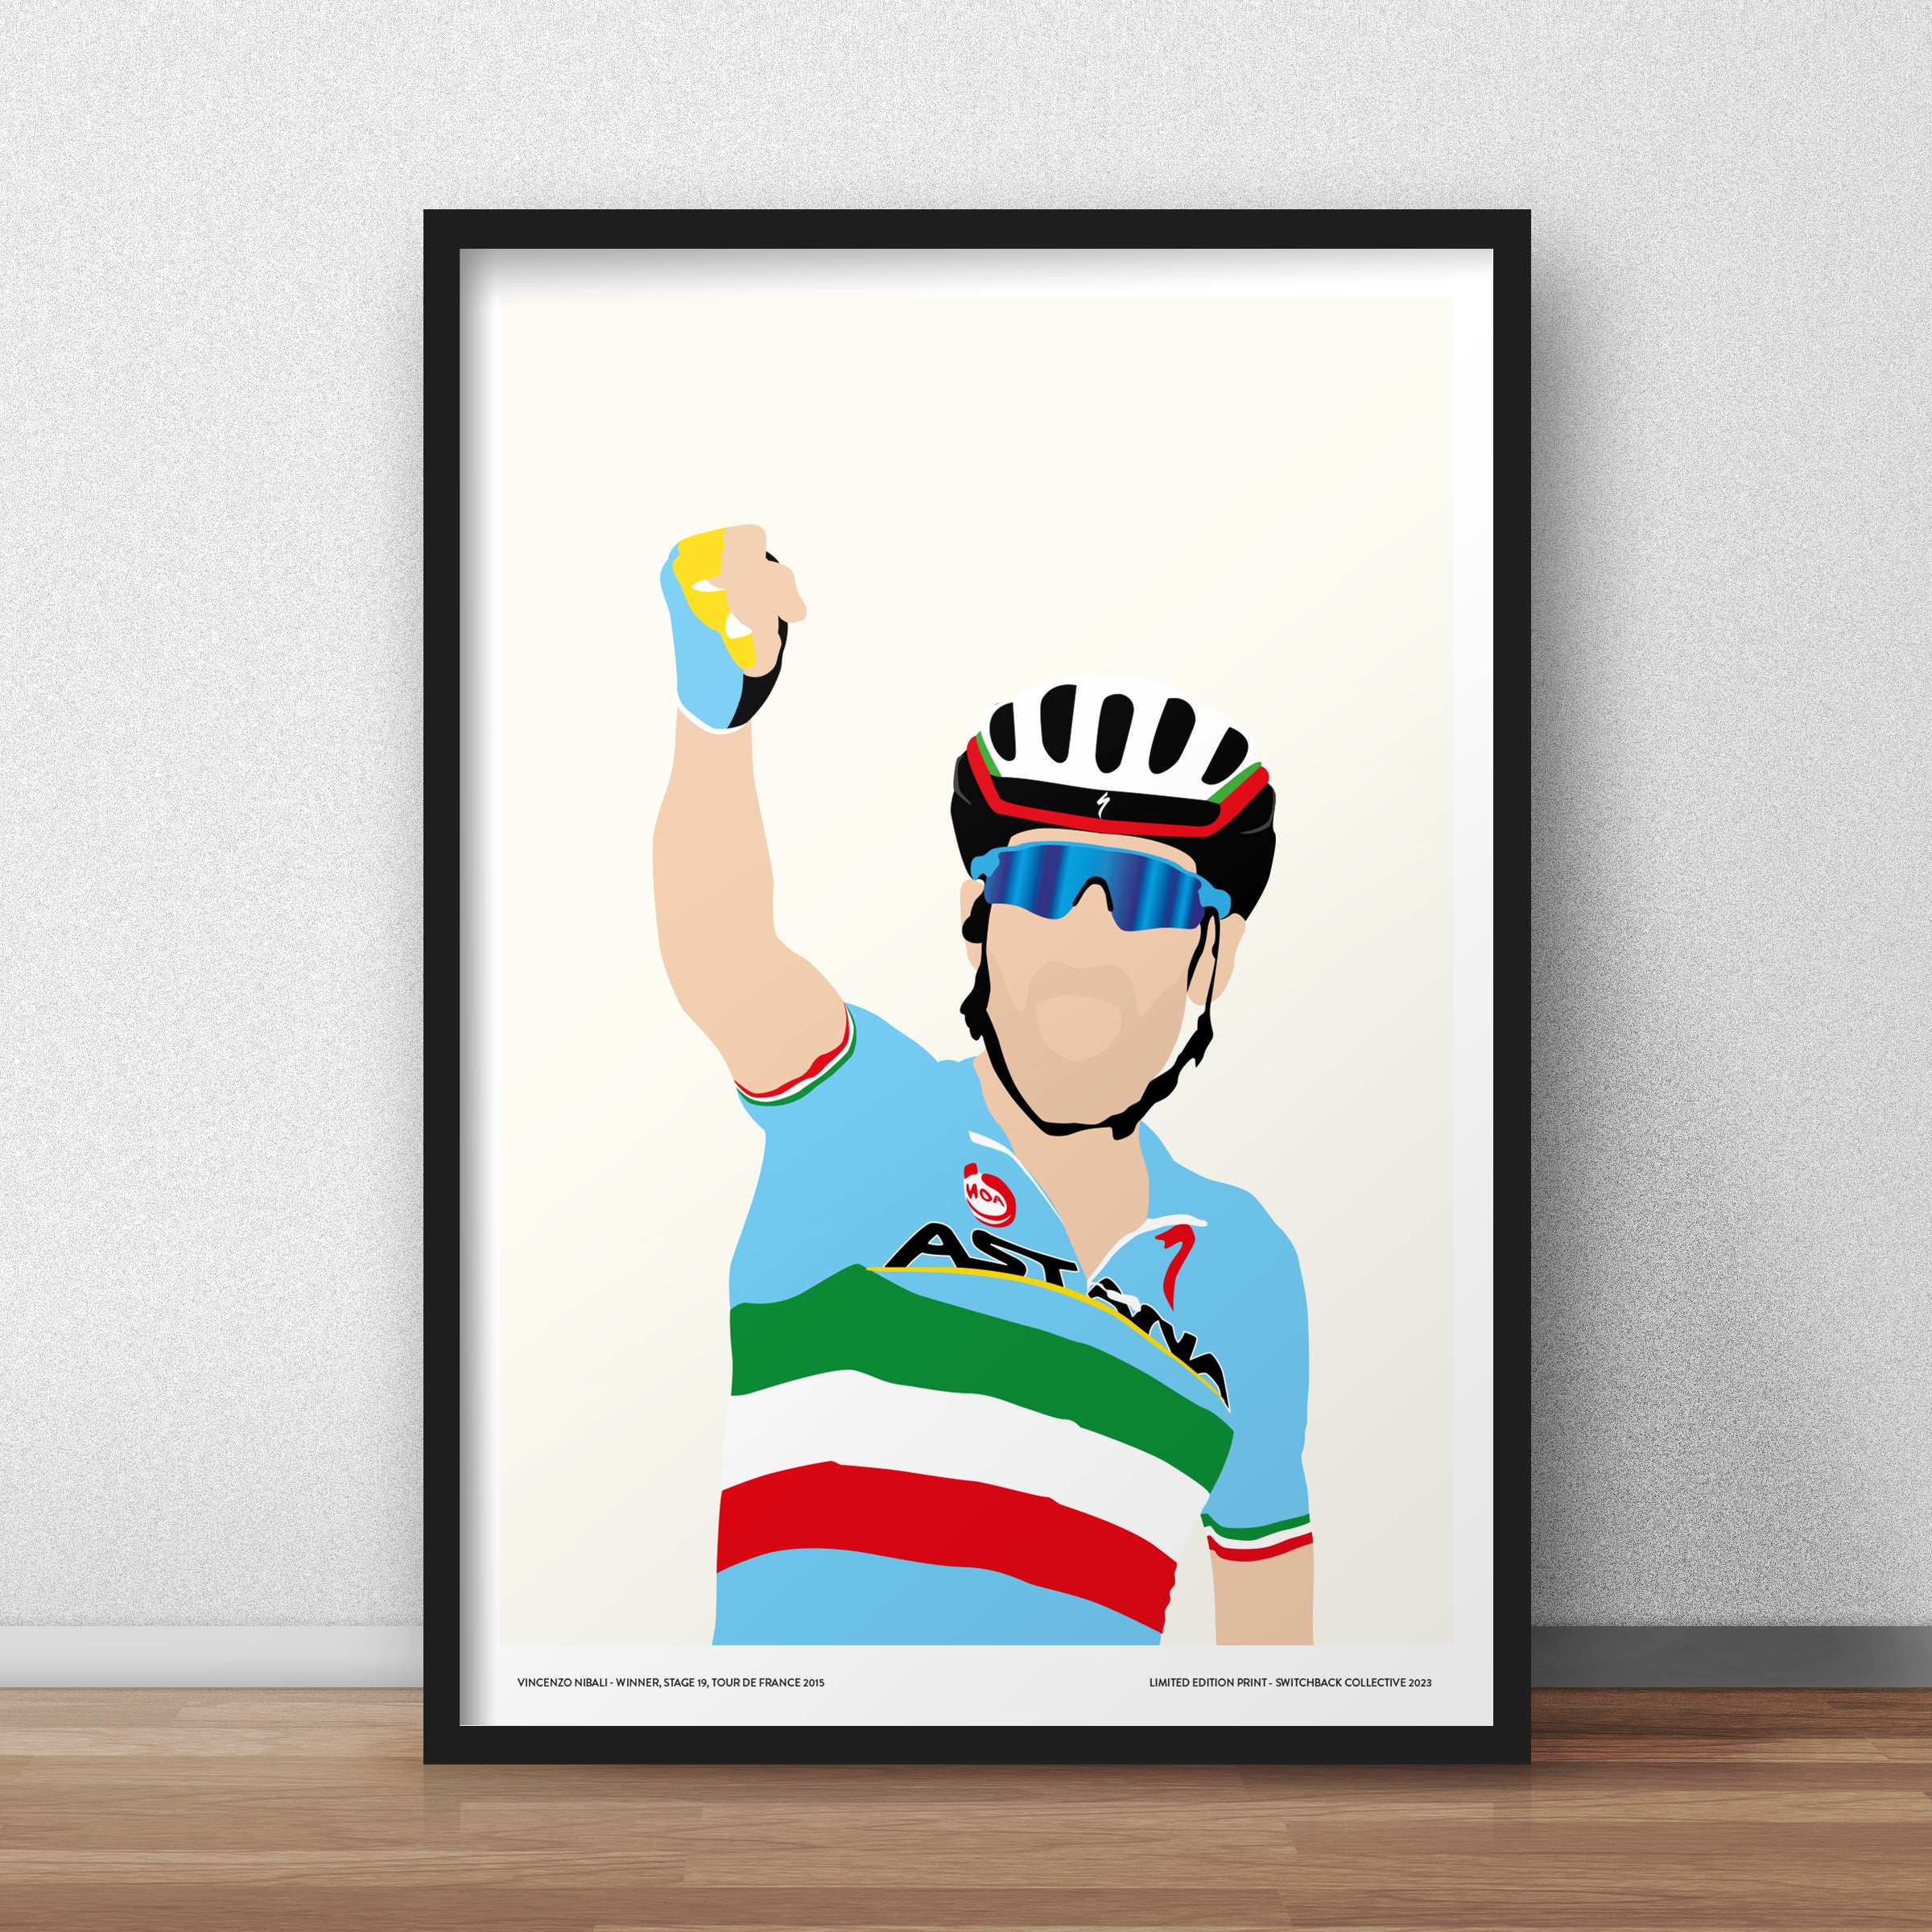 Vincenzo Nibali - Winning Stage 19, Tour de France 2015 - Limited Edition Print